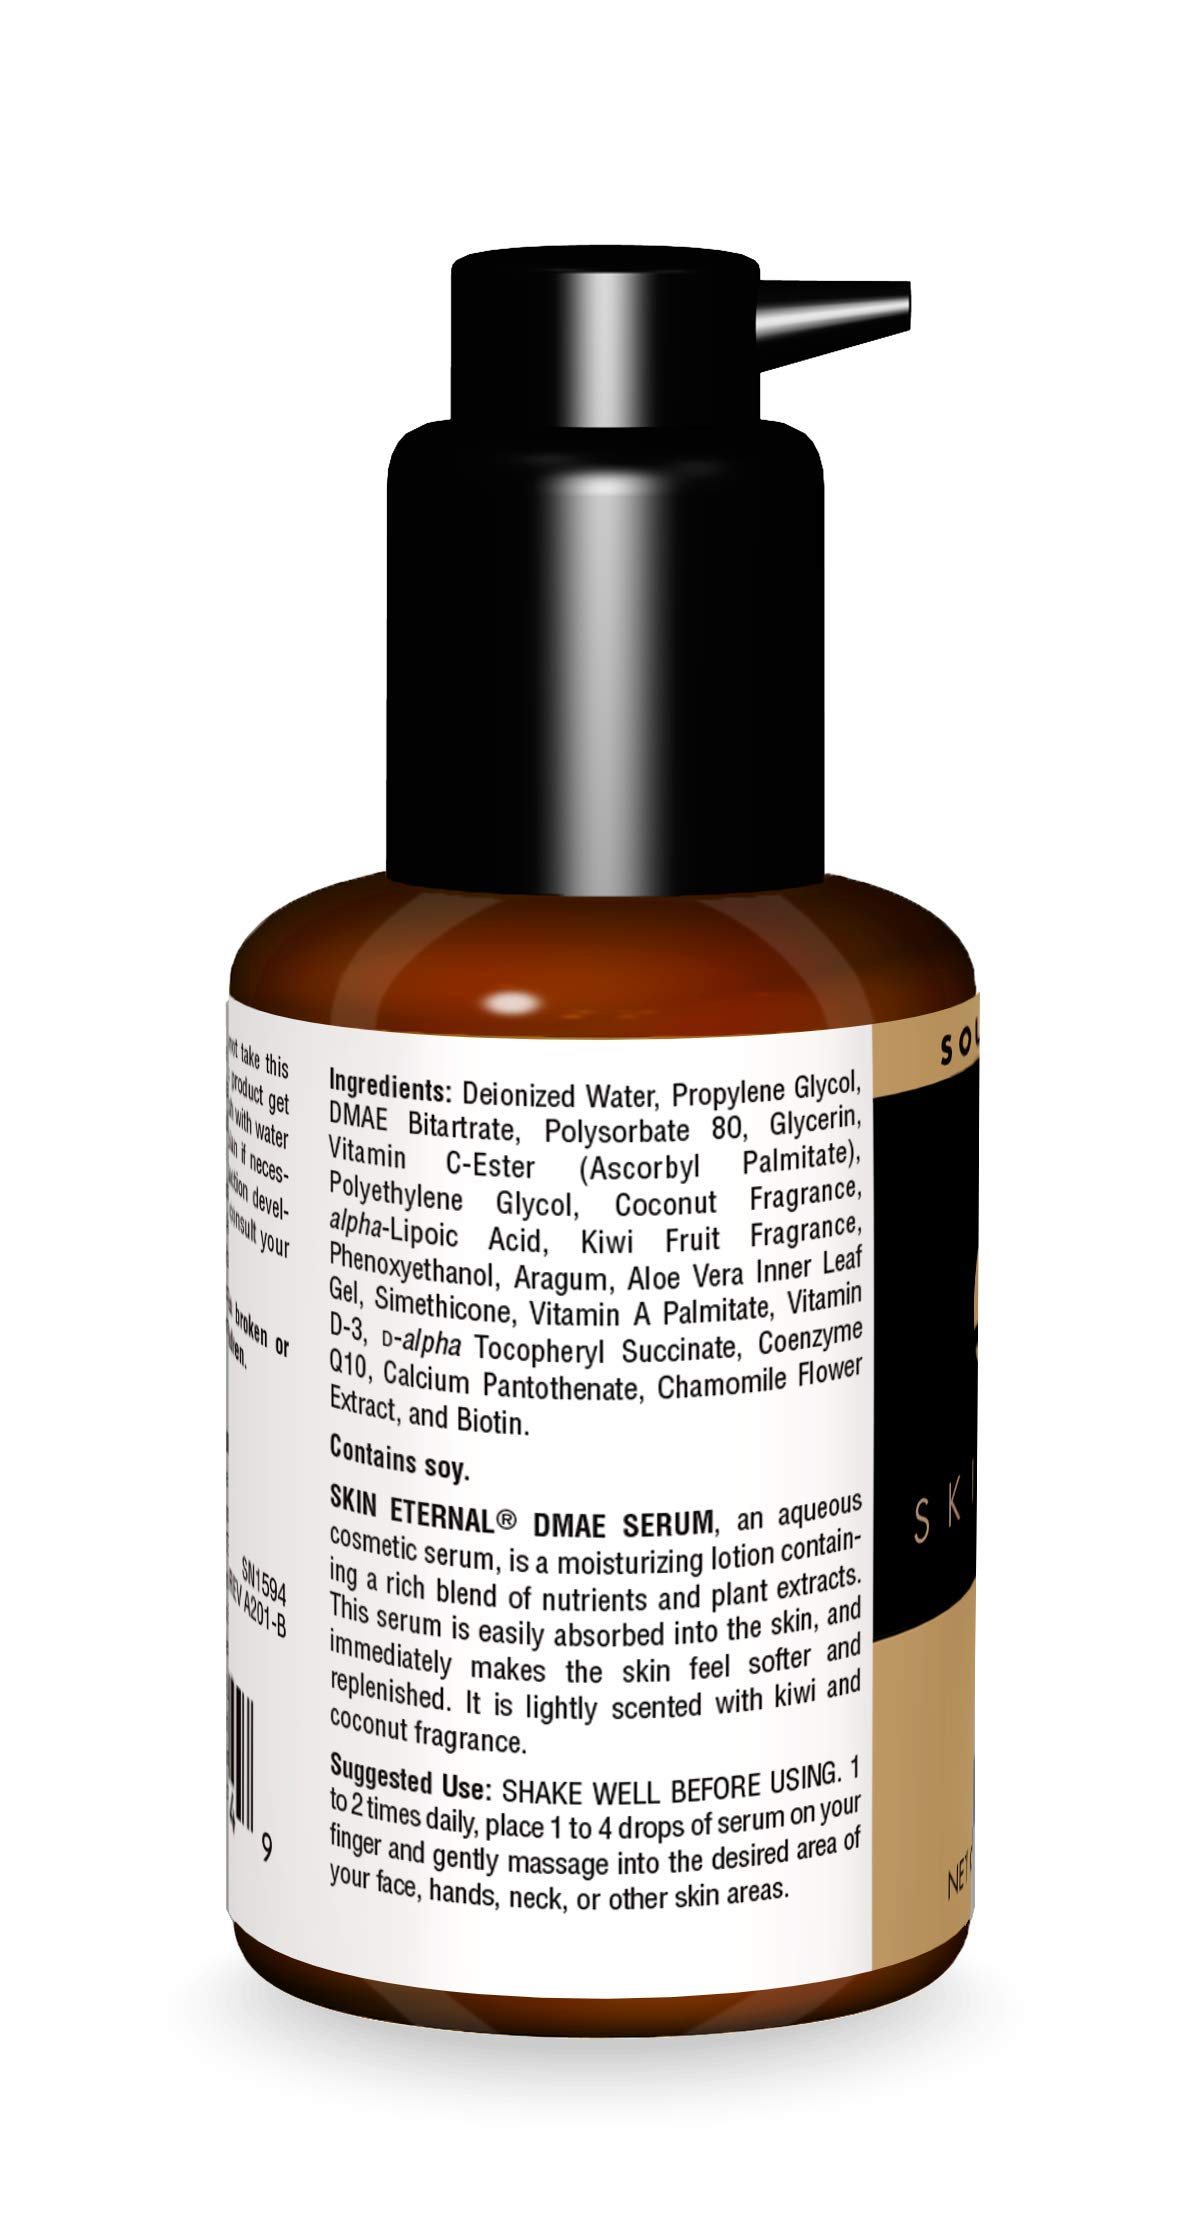 Source Naturals Skin Eternal DMAE Serum - Paraben Free, Supports Soft & Replenished Skin - 1.7 Fluid oz